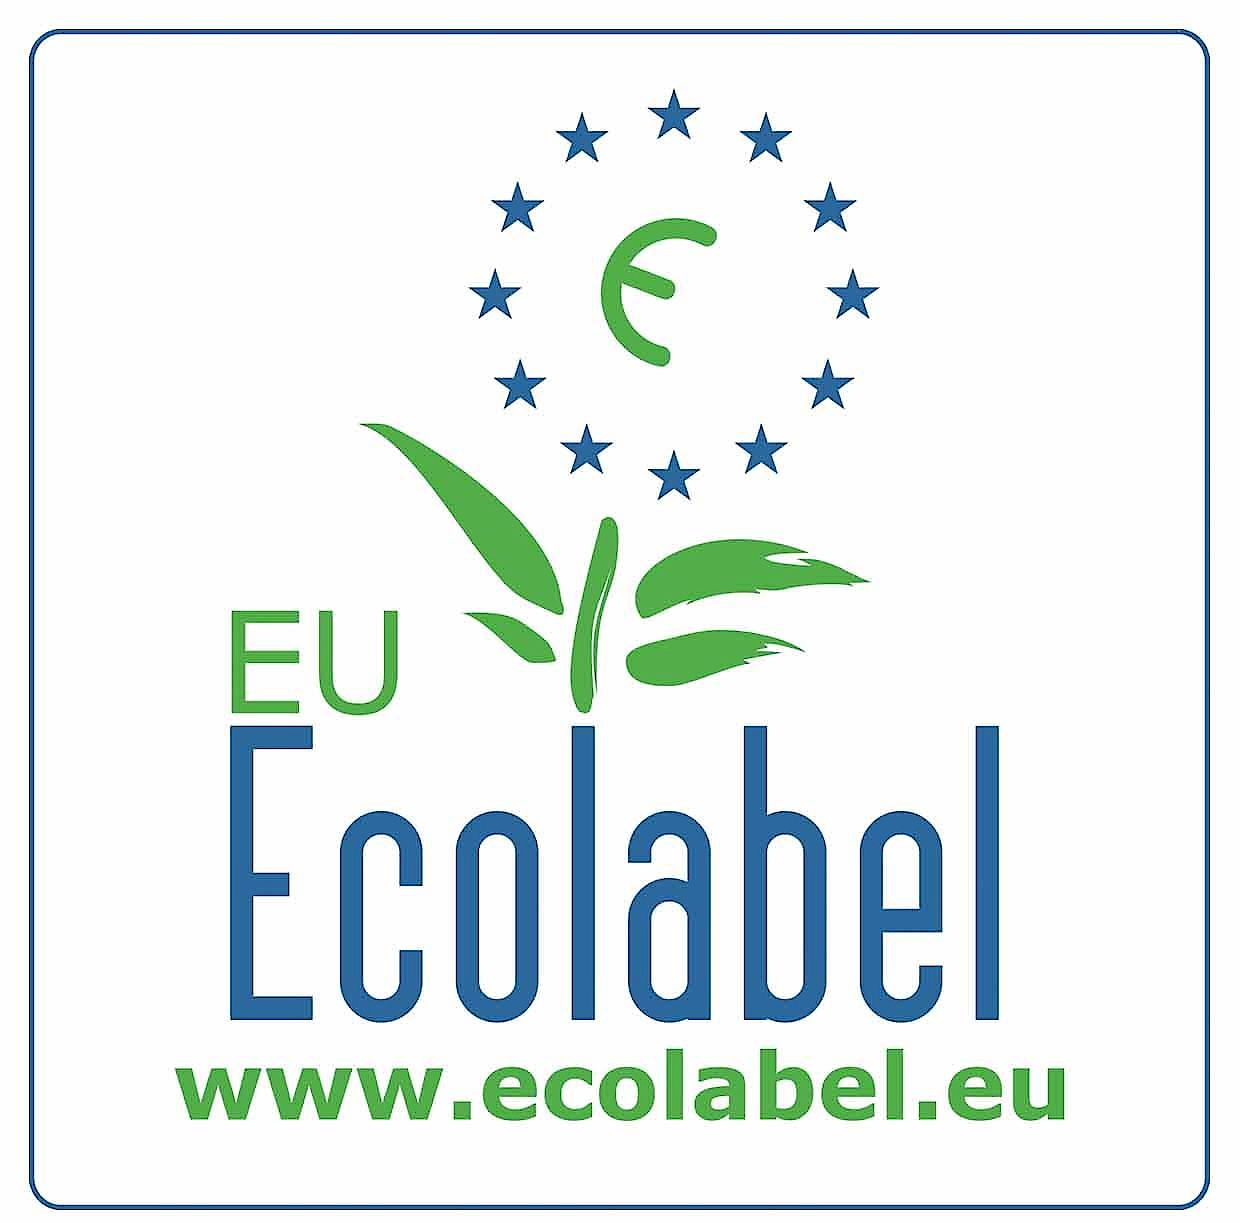 csm_EU_Ecolabel_blanko_1e1df86fc8.jpg